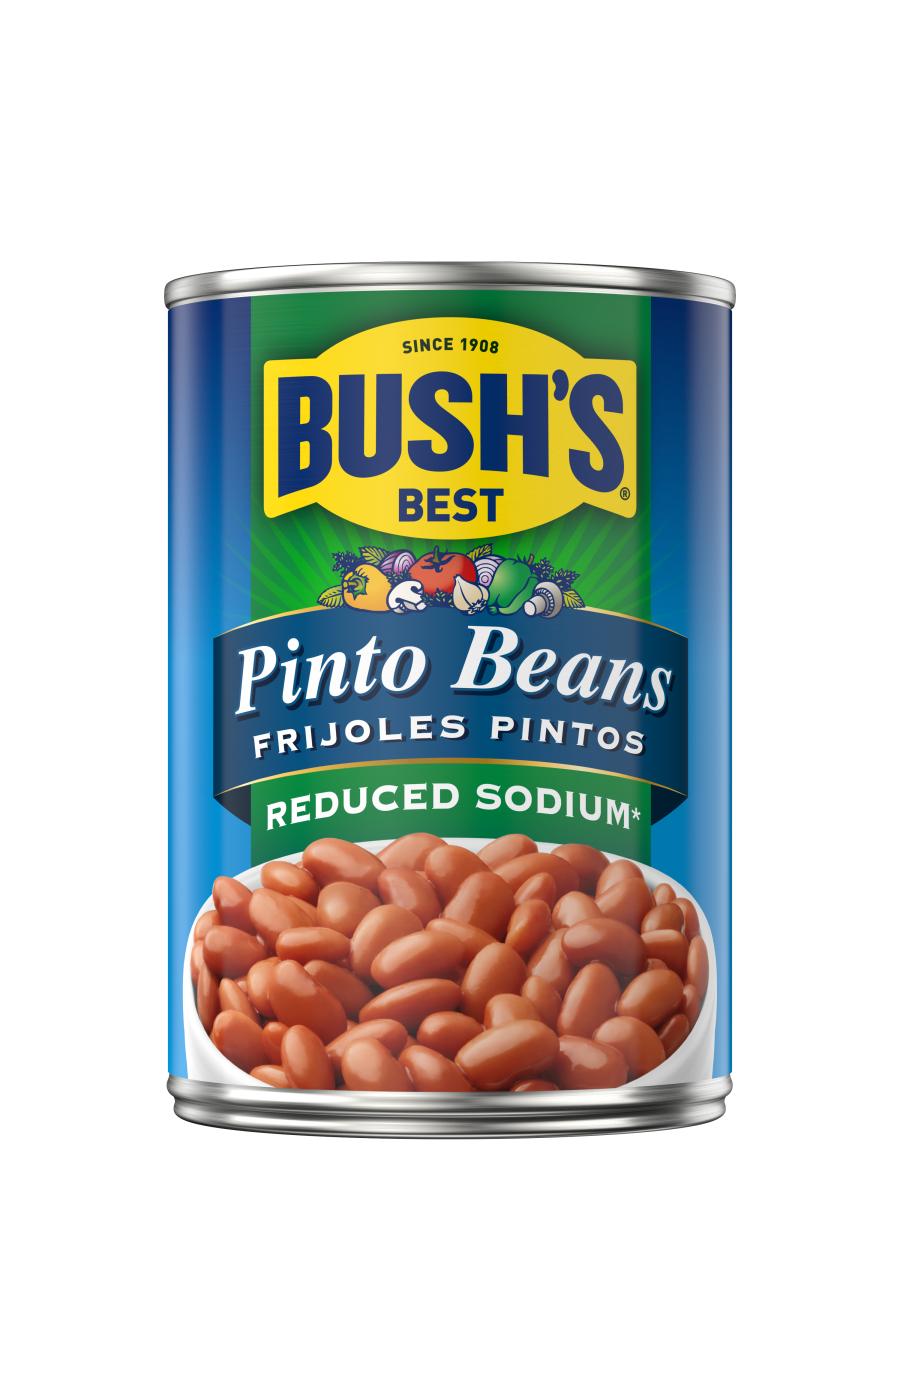 Bush's Best Reduced Sodium Pinto Beans; image 1 of 4